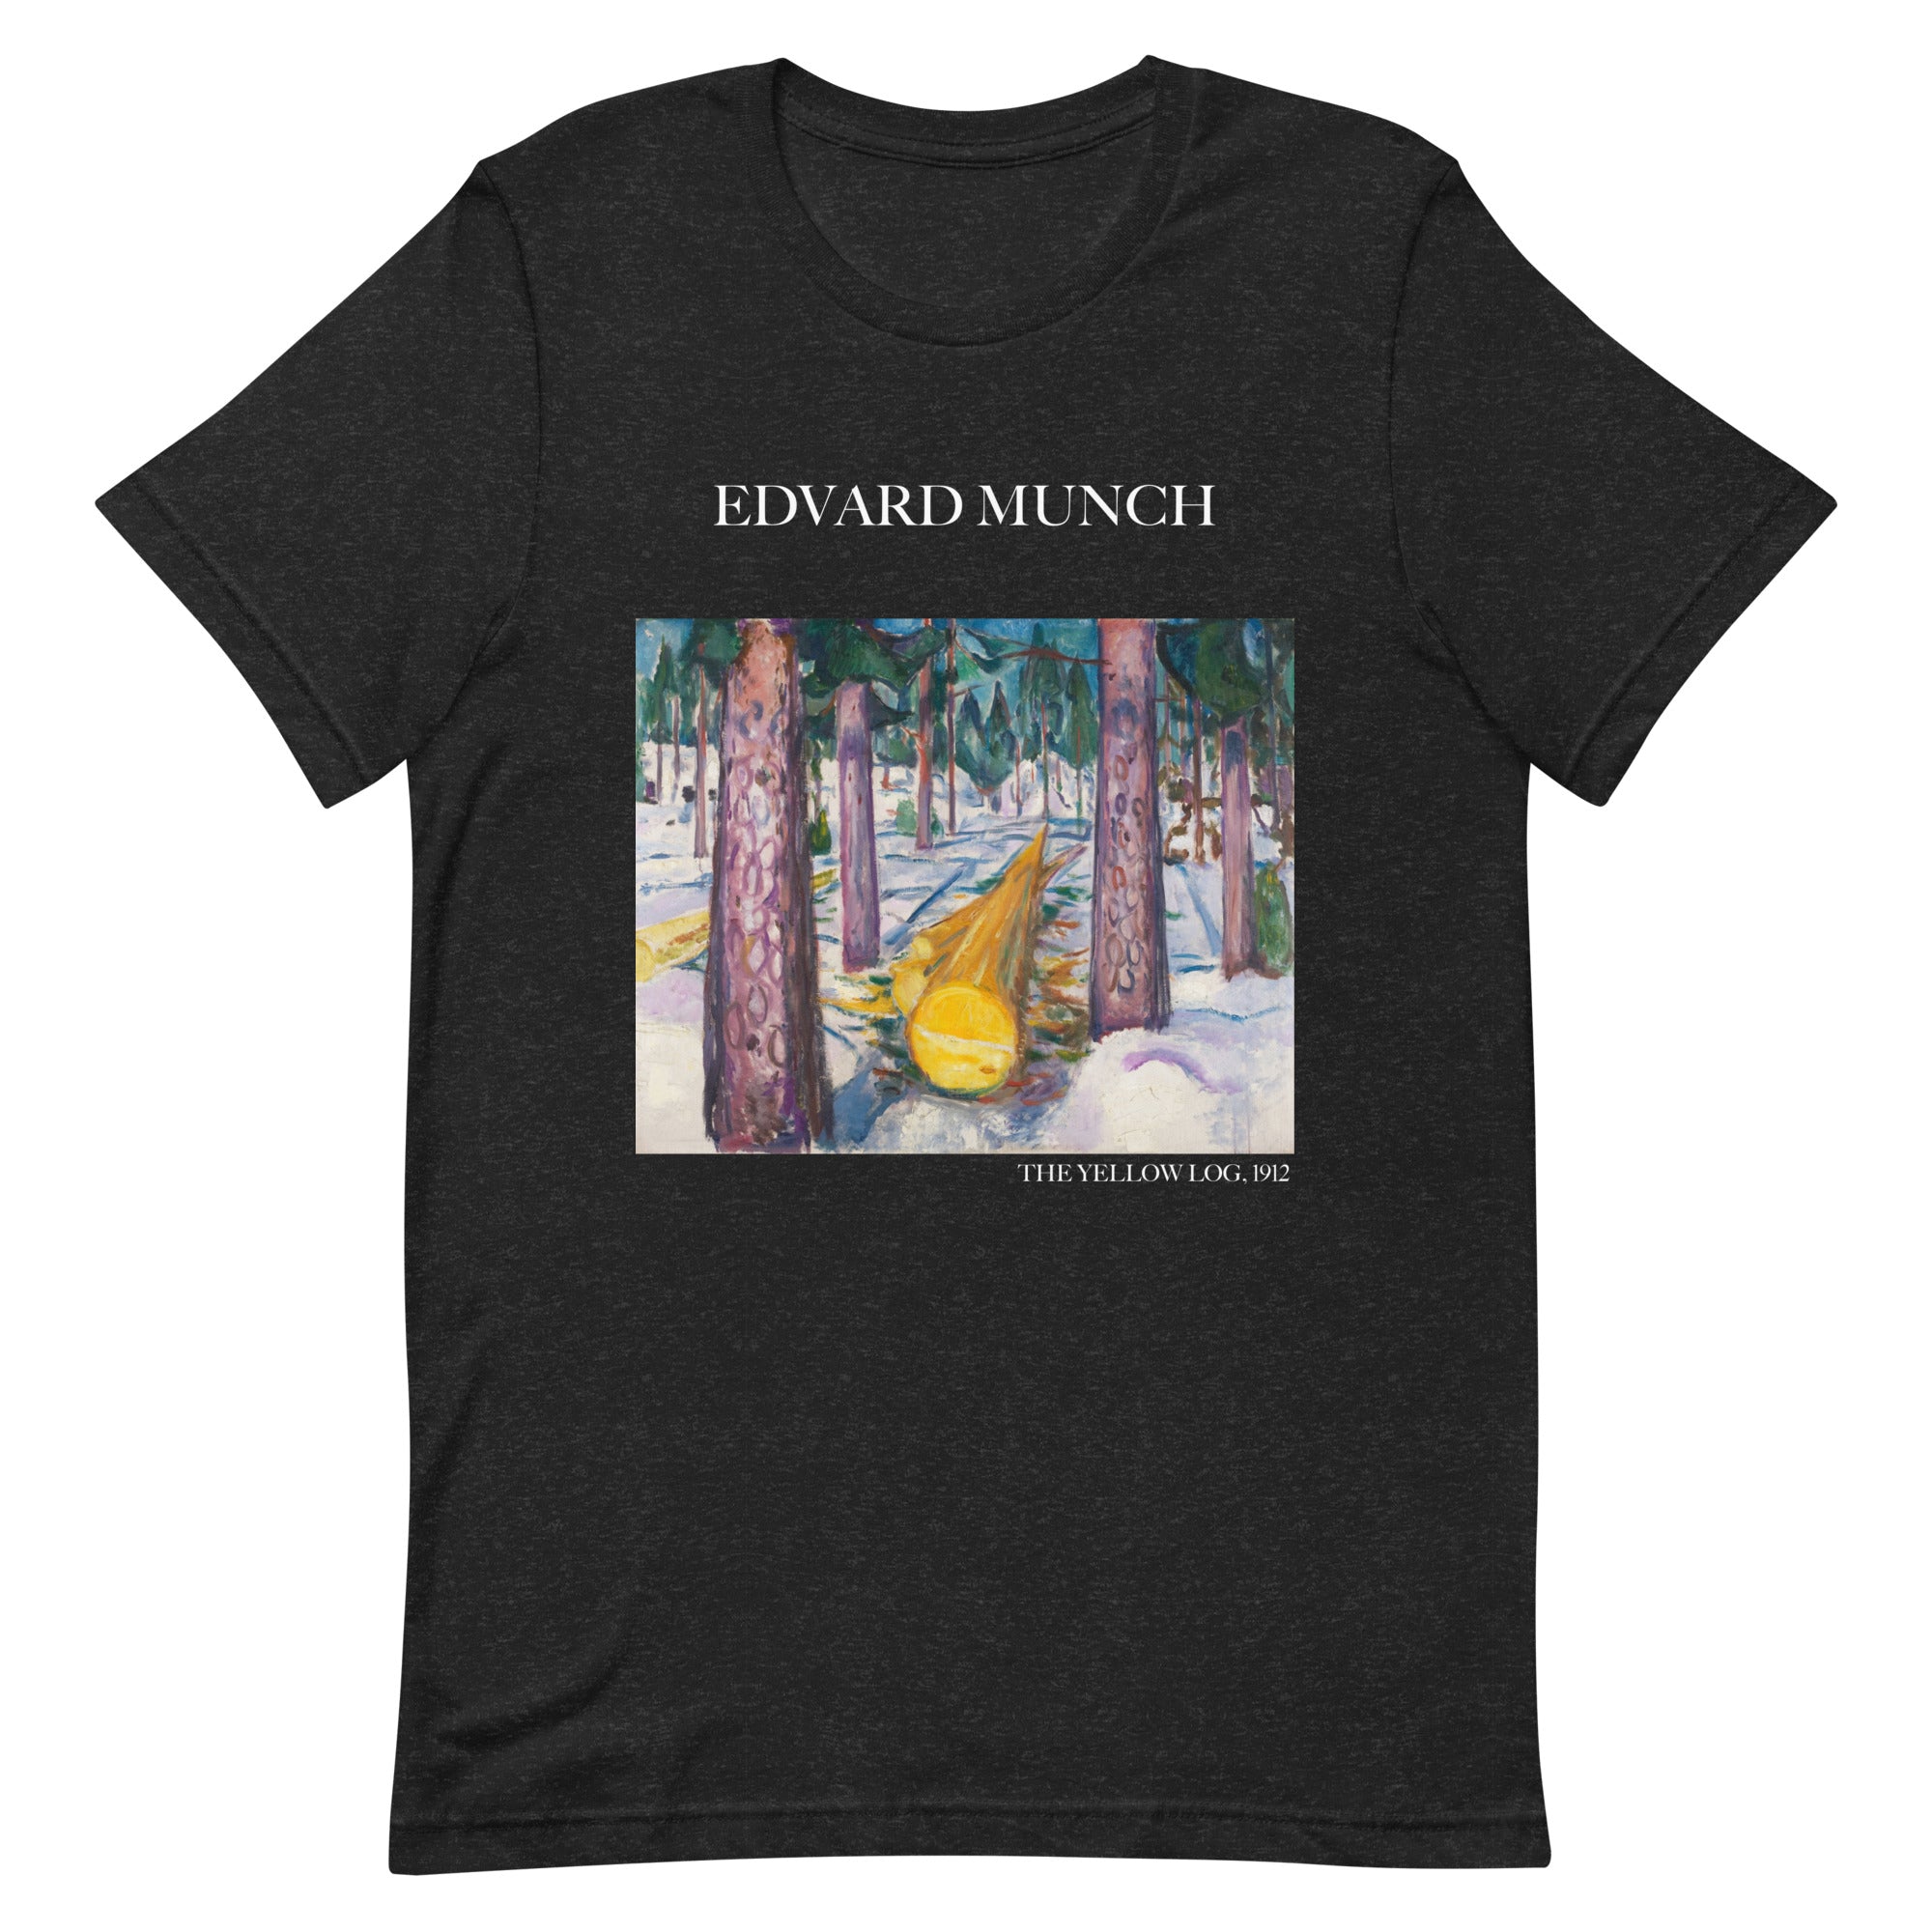 Edvard Munch 'The Yellow Log' Famous Painting T-Shirt | Unisex Classic Art Tee